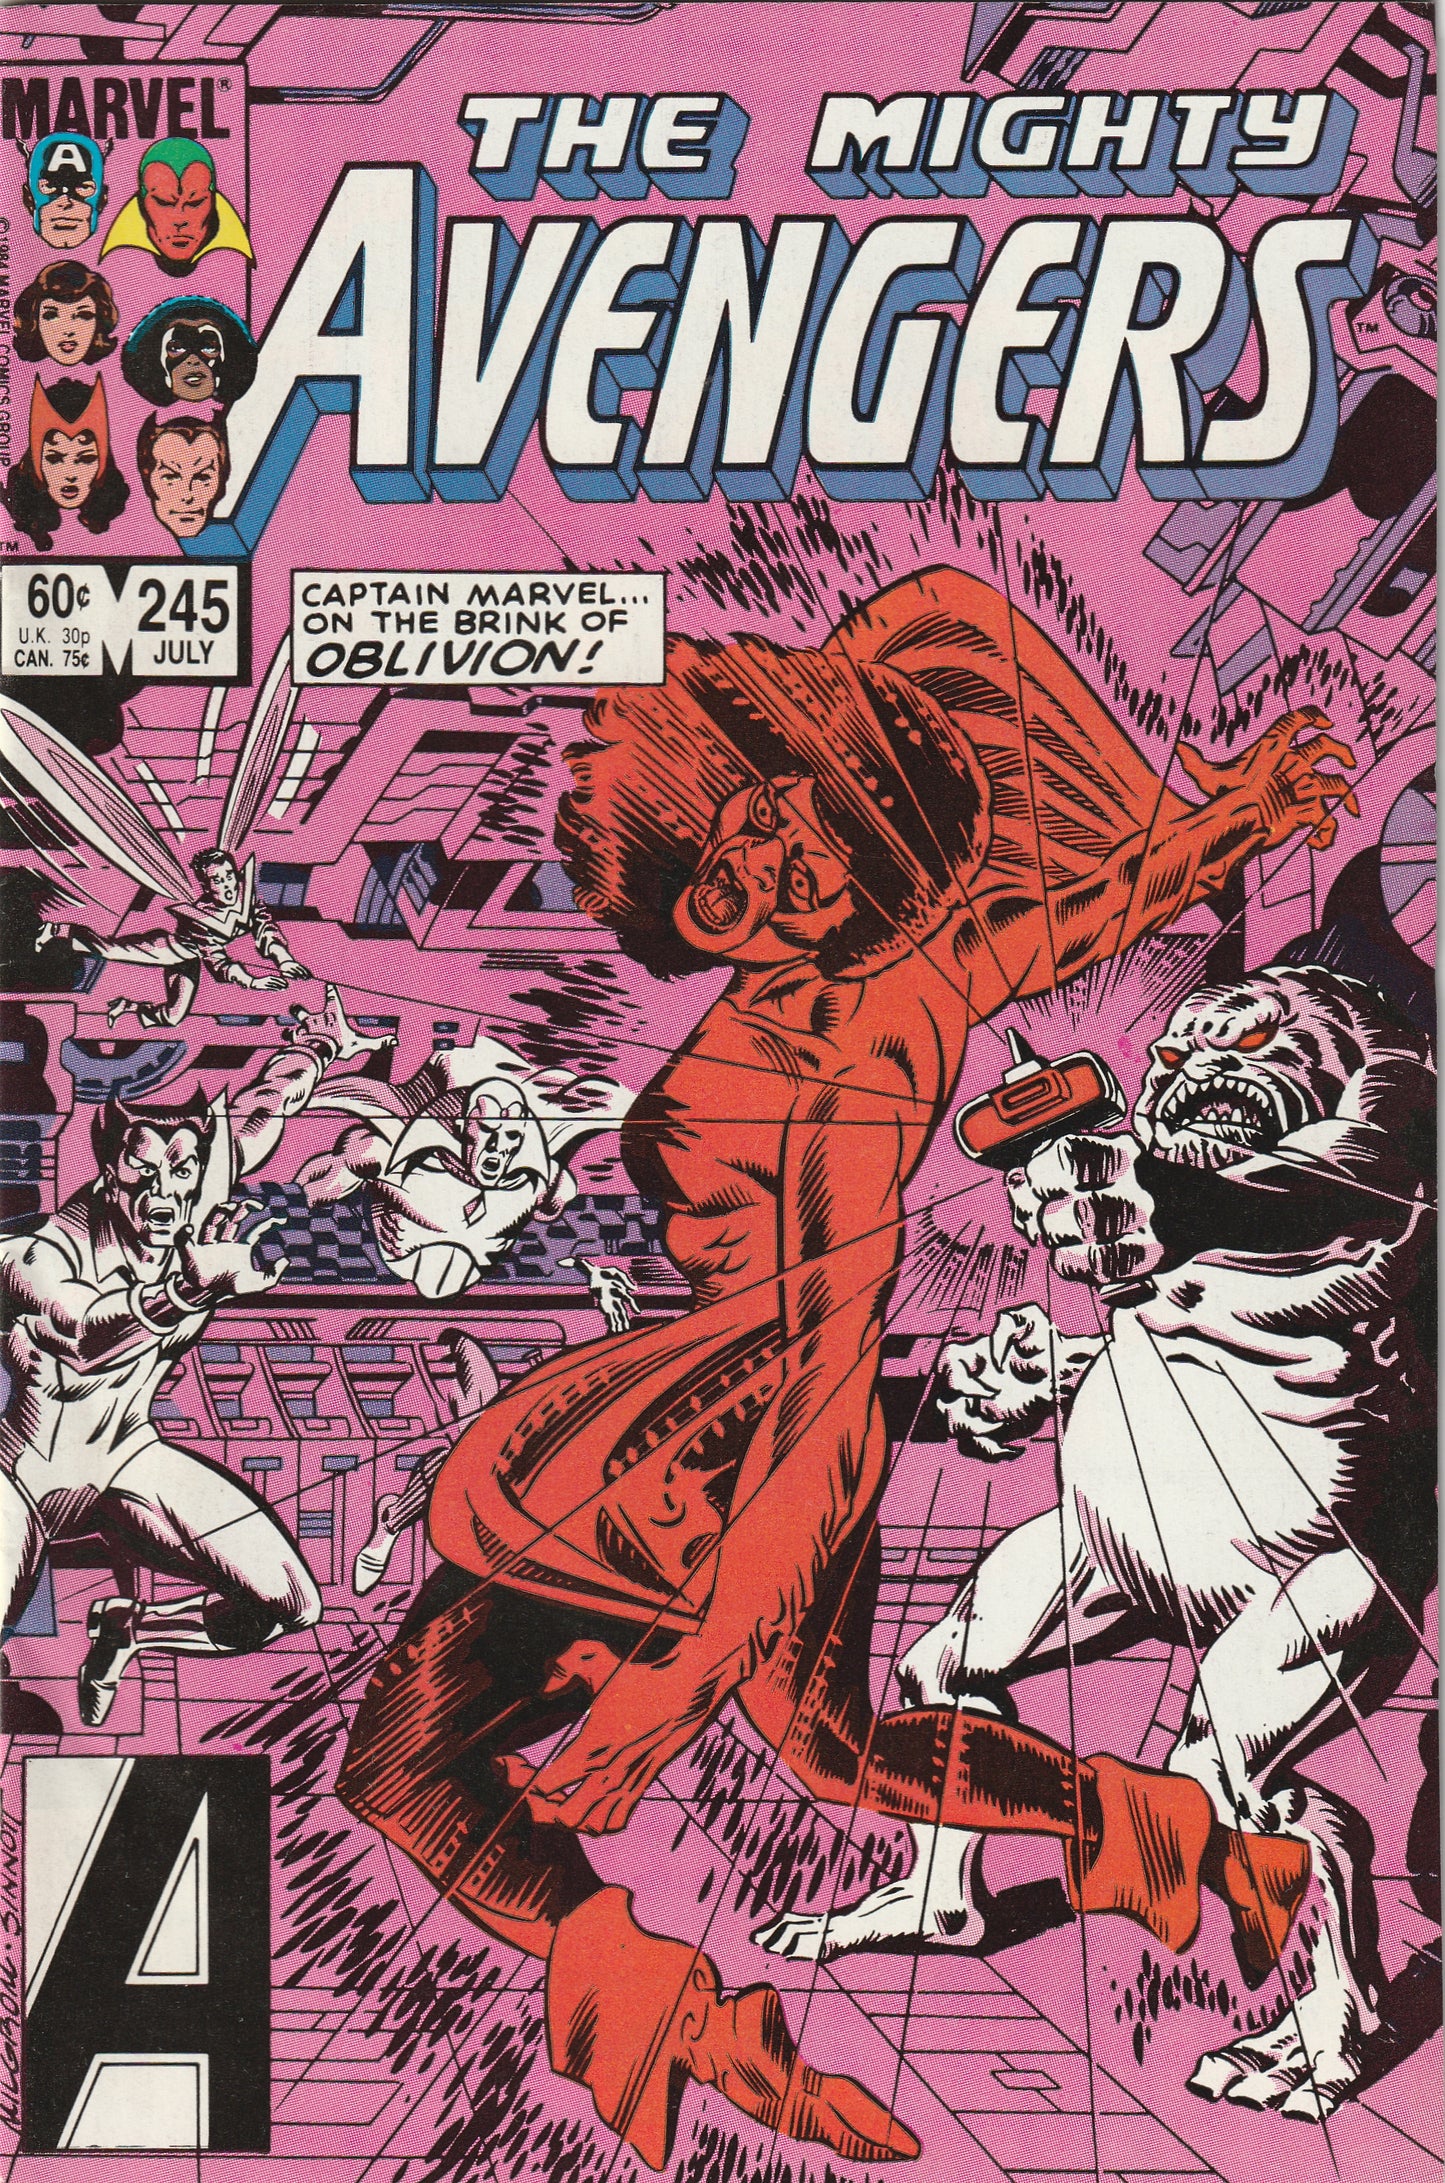 Avengers #245 (1984) - Dire Wraiths appearance